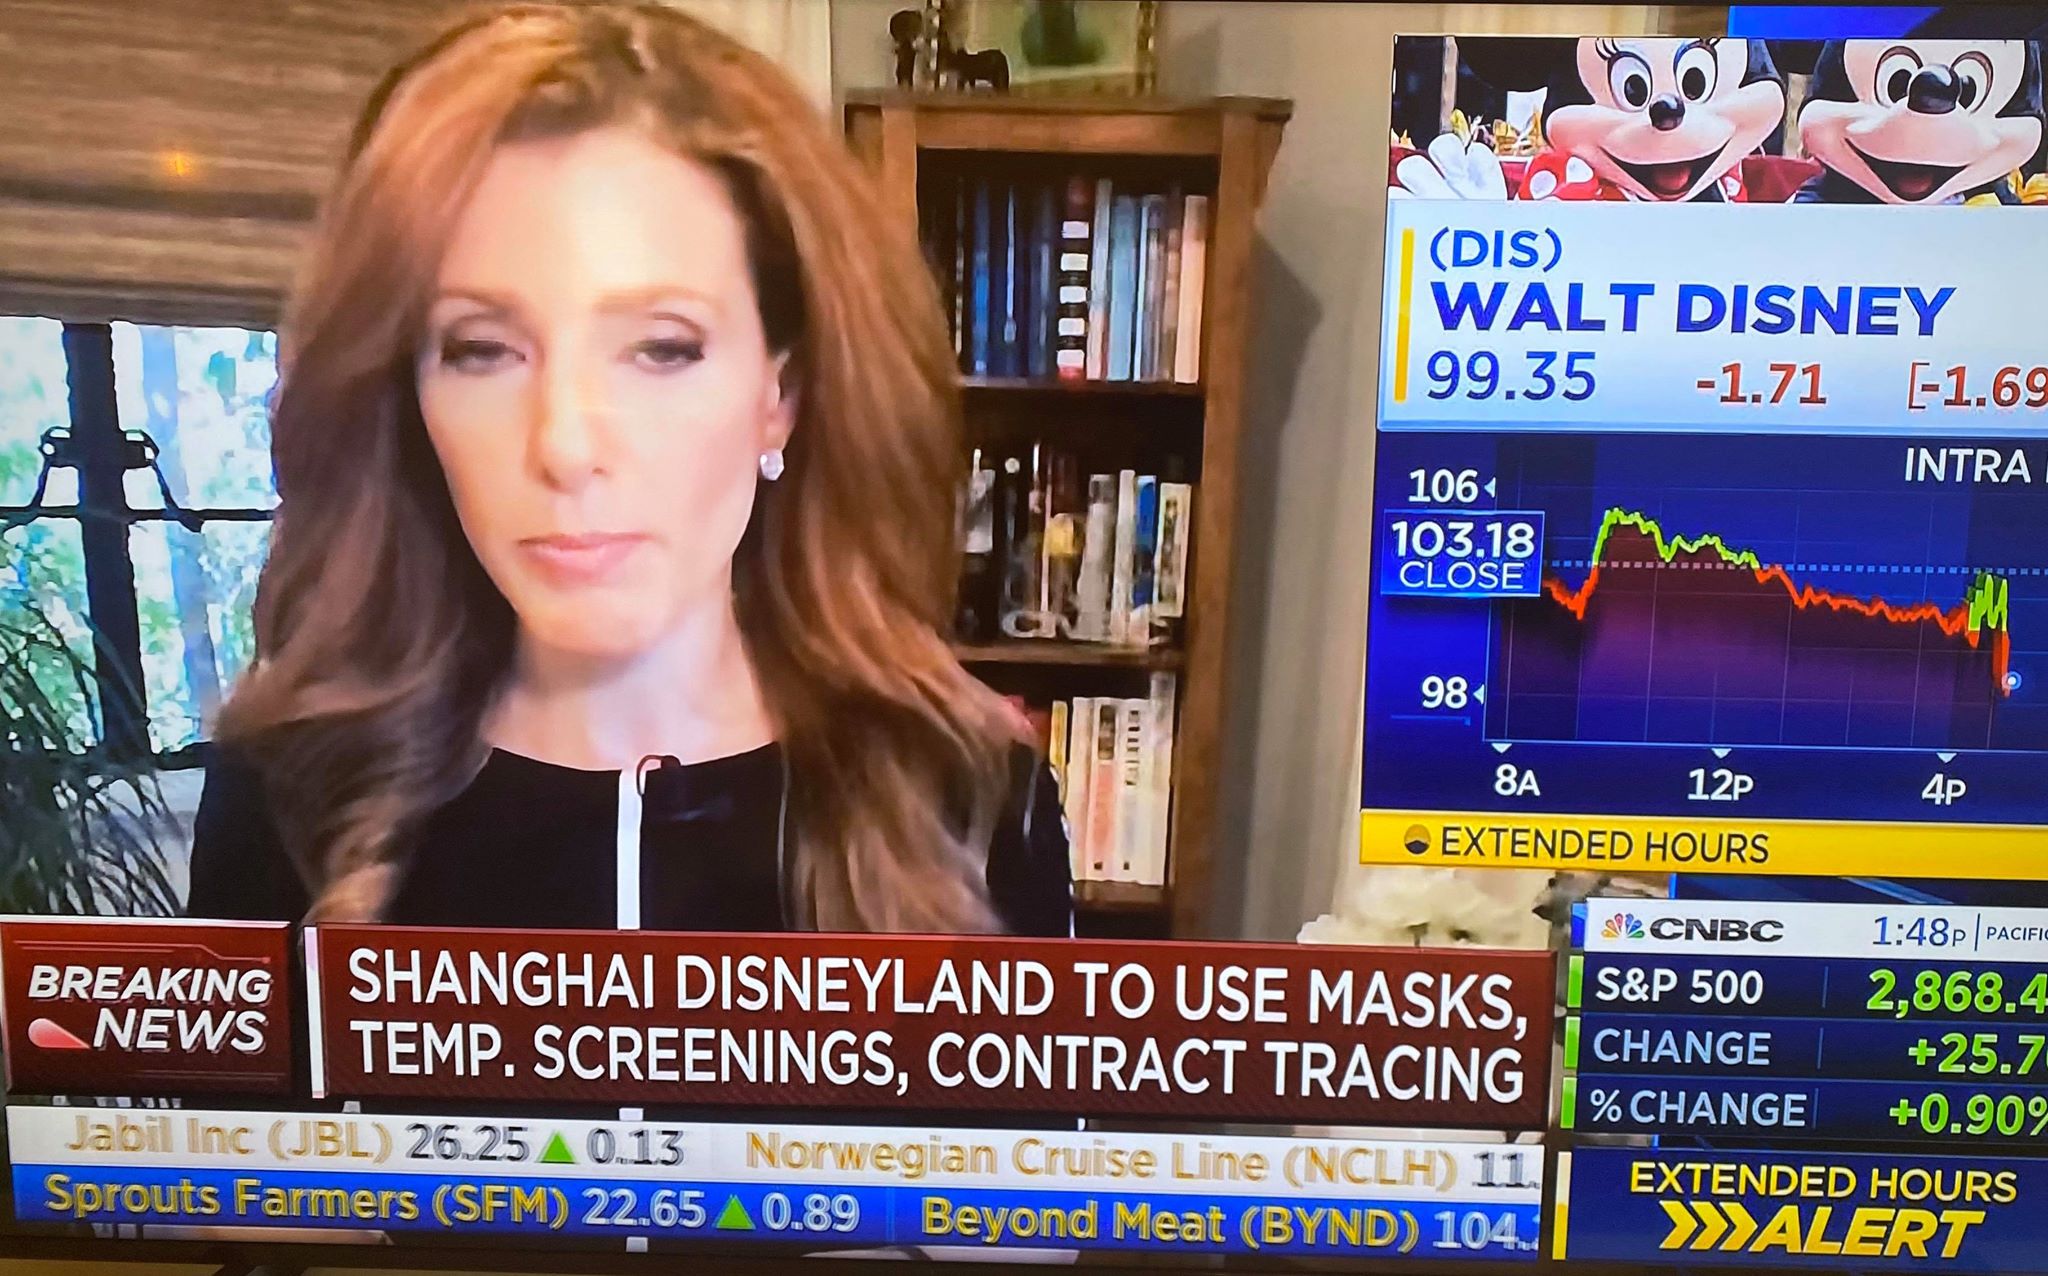 Shanghai Disneyland reopen